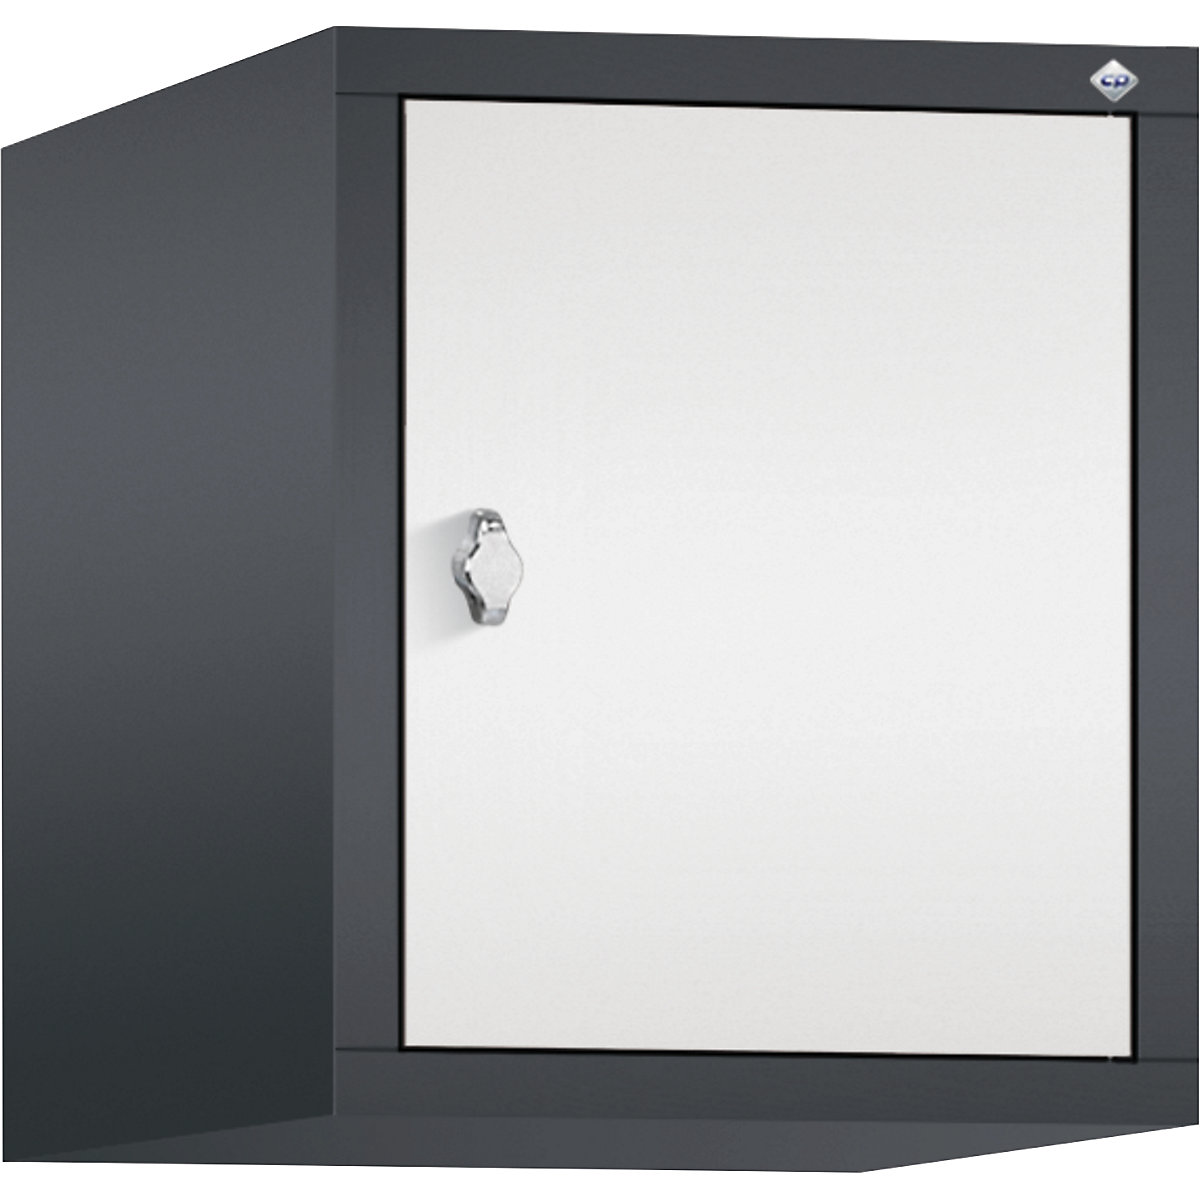 C+P – Altillo CLASSIC, 1 compartimento, anchura de compartimento 400 mm, gris negruzco / blanco tráfico